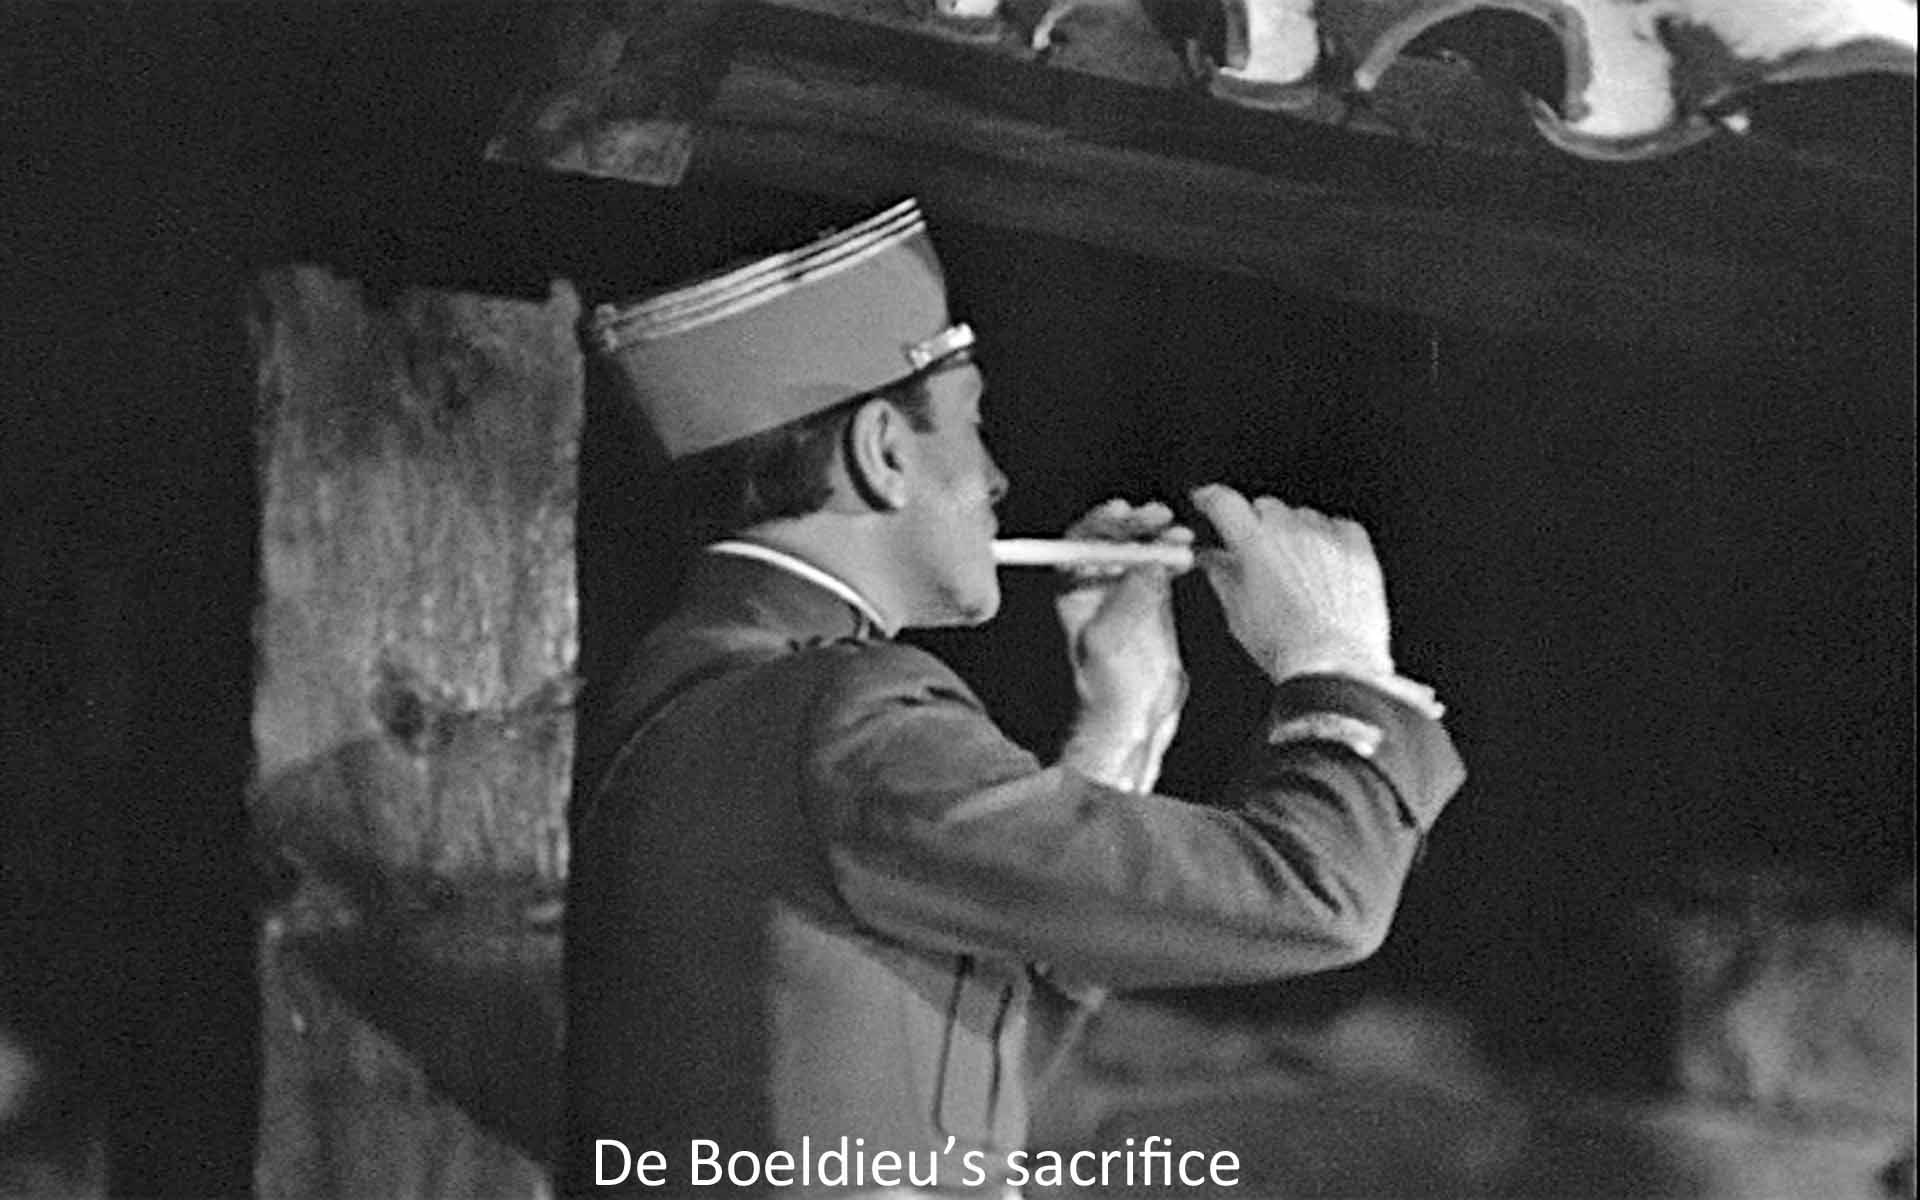 De Boeldieu's sacrifice